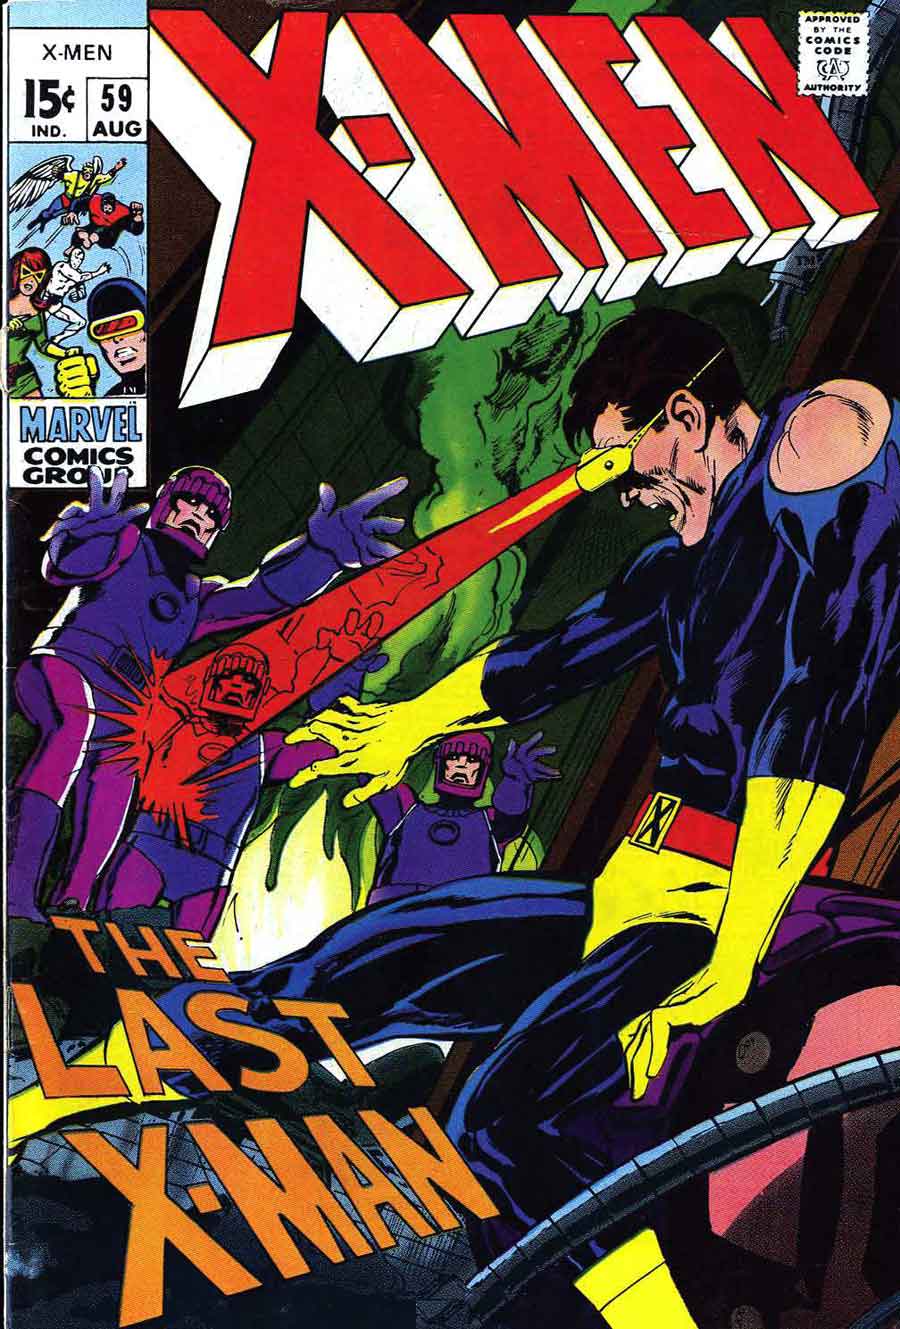 X-men #59 - Neal Adams art & cover - Pencil Ink